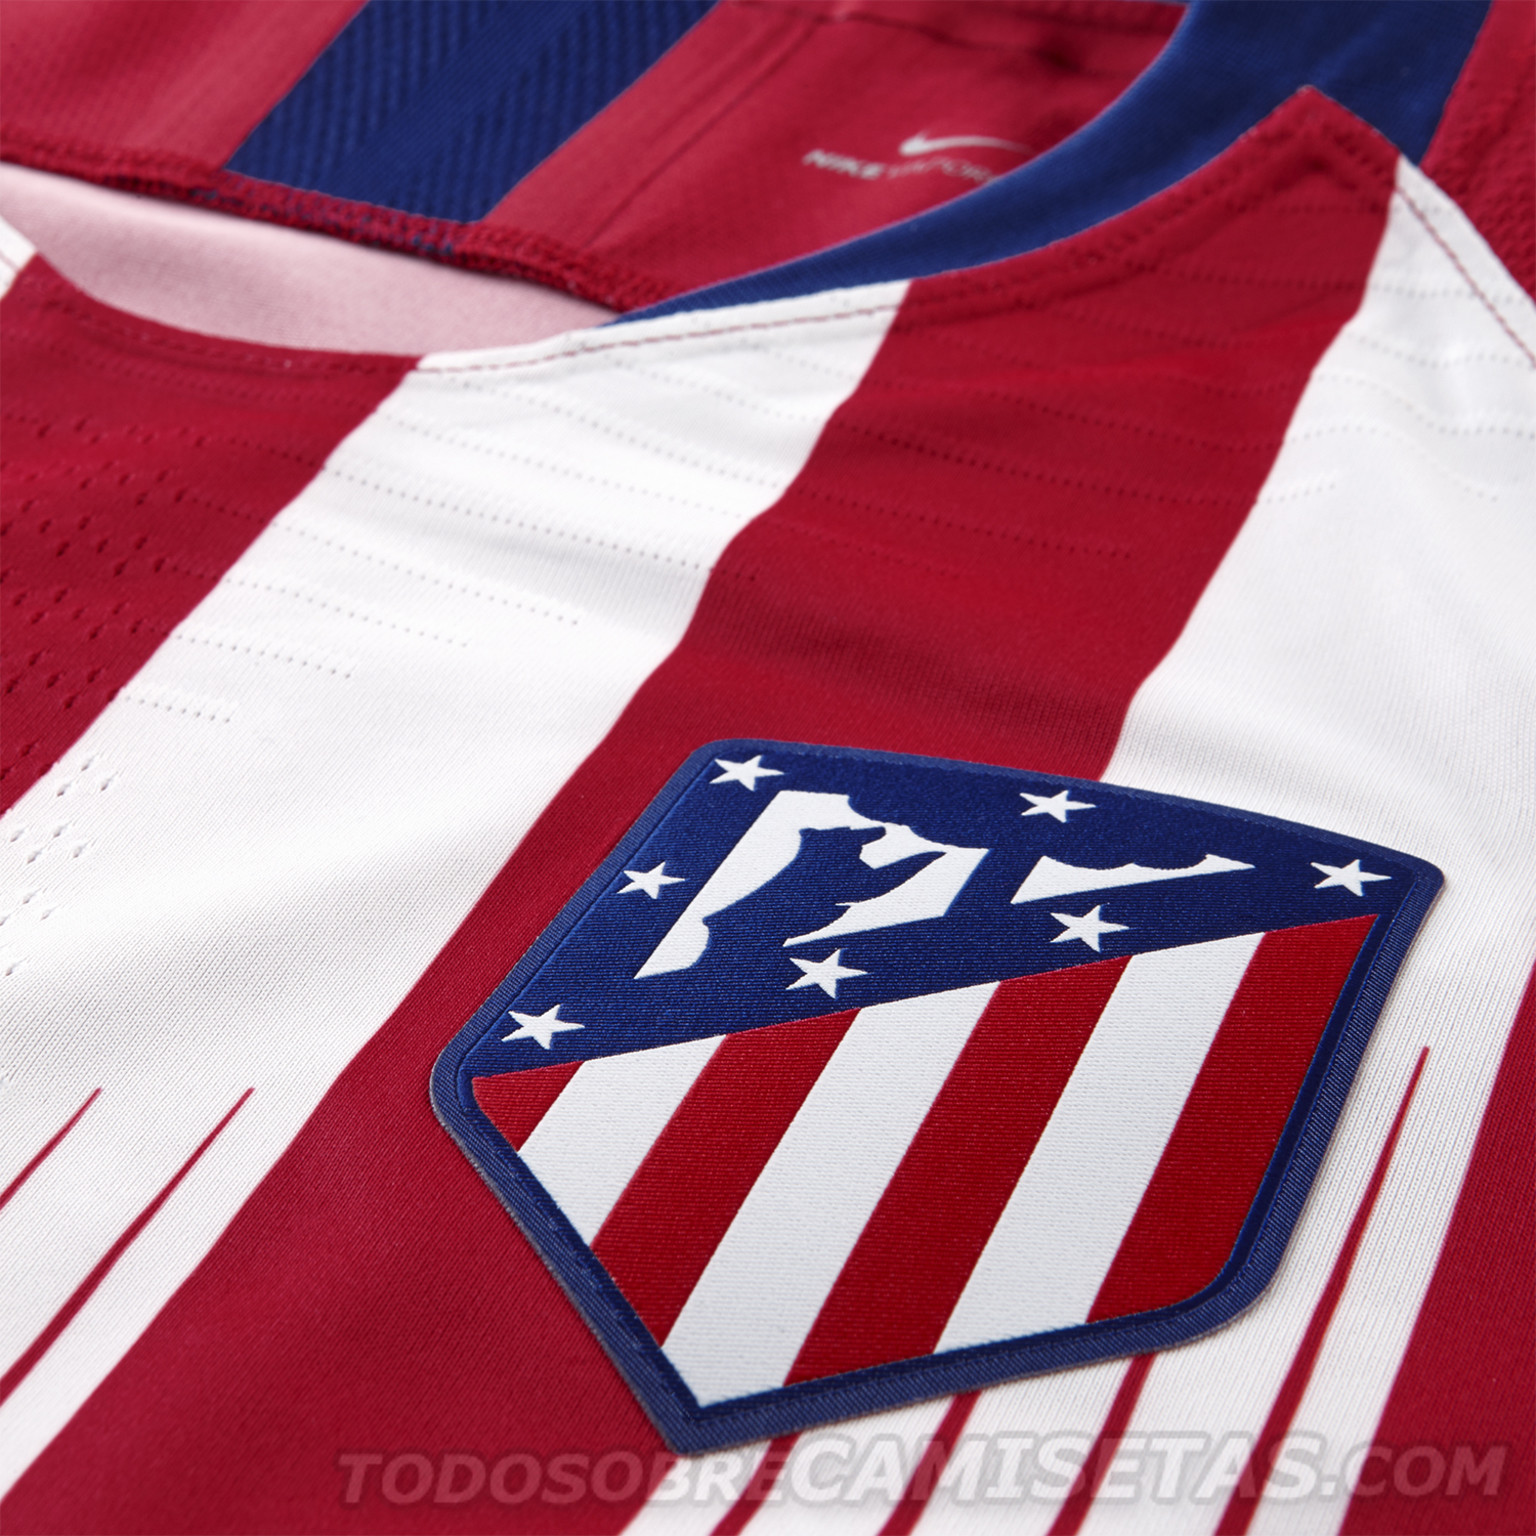 Camiseta Nike de Atlético de Madrid 2018-19